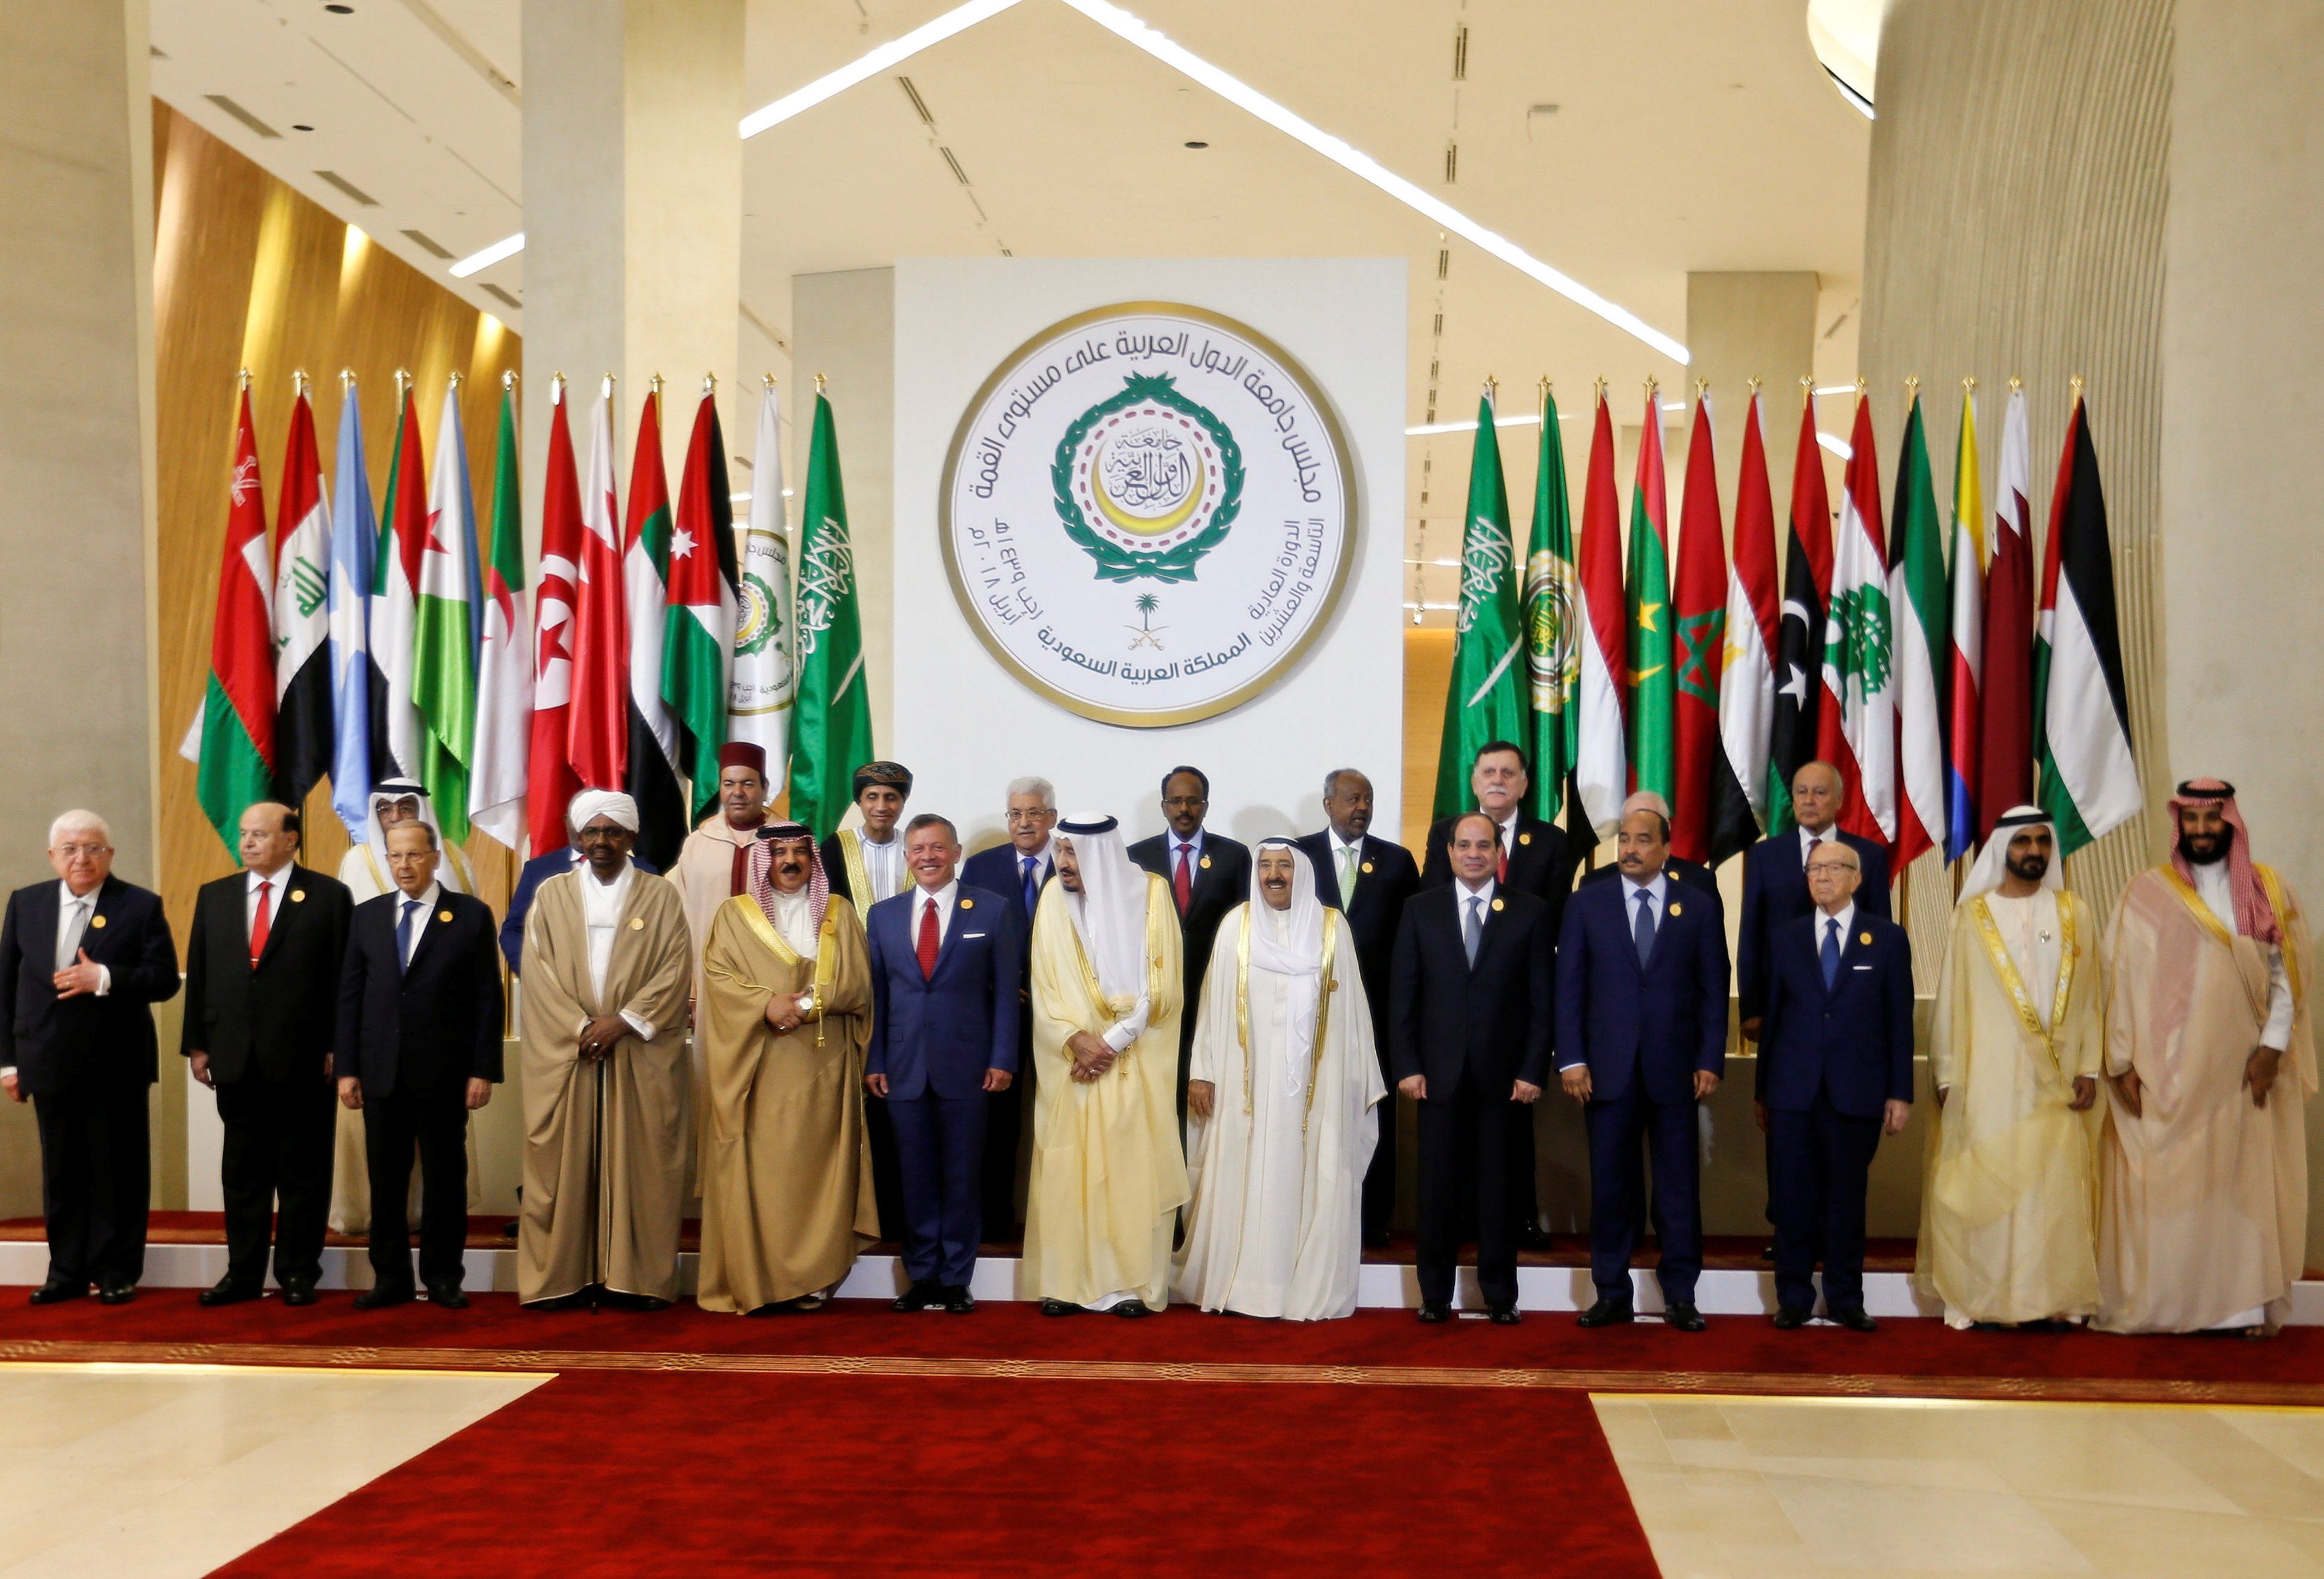 Arab leaders pose for the camera, ahead of the 29th Arab Summit in Dhahran, Saudi Arabia